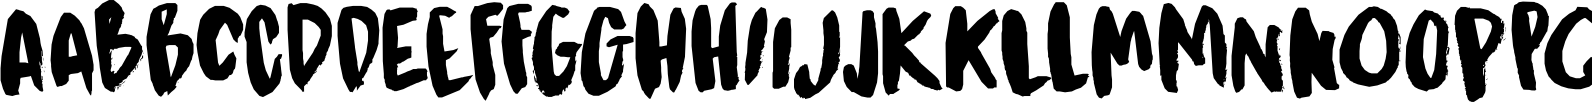 Kitsune Tail Font OpenType